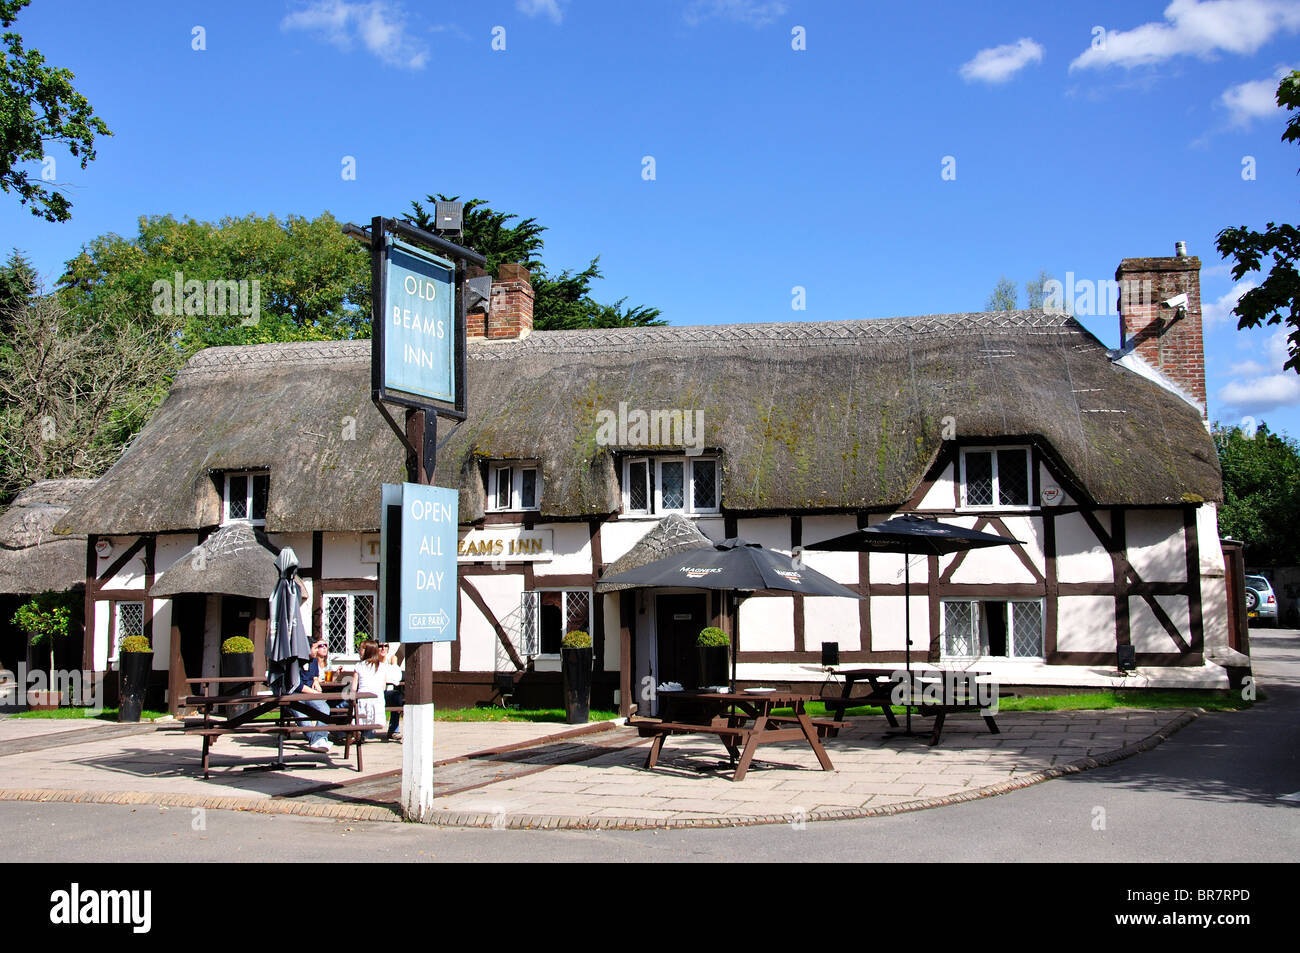 Old Beams Inn, Sailsbury Road, Ibsley, Ringwood, Hampshire, England, United Kingdom Stock Photo